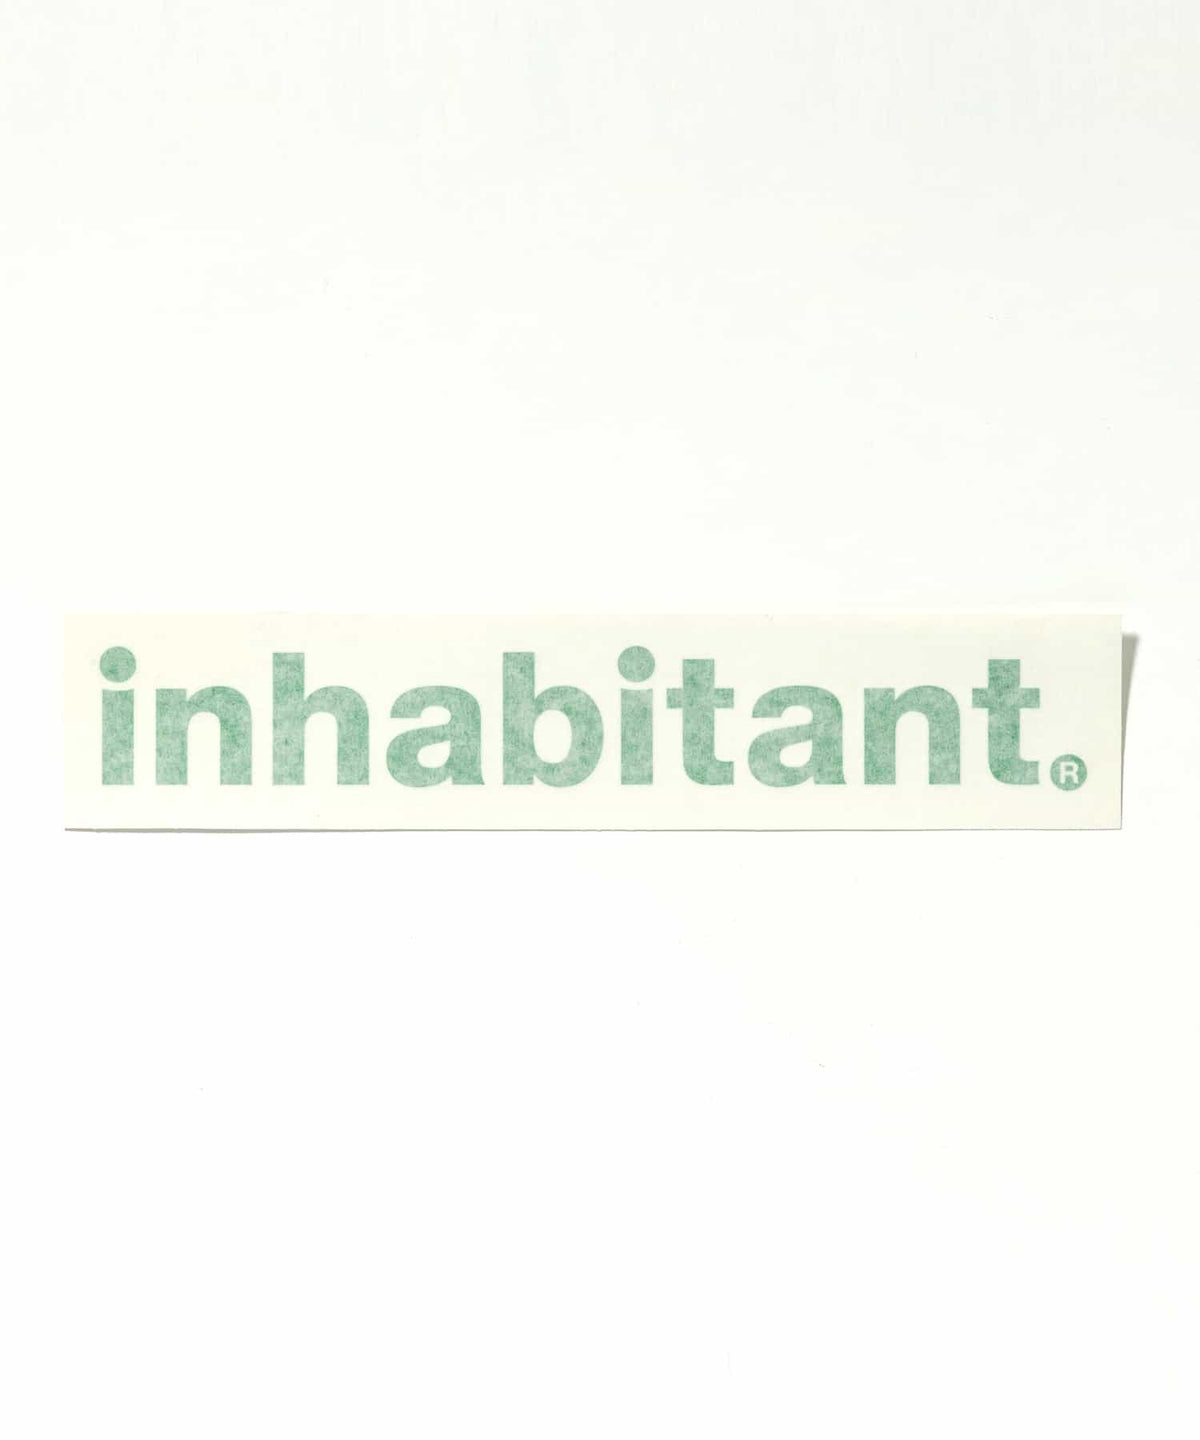 【MENS】Inhabitant logo sticker